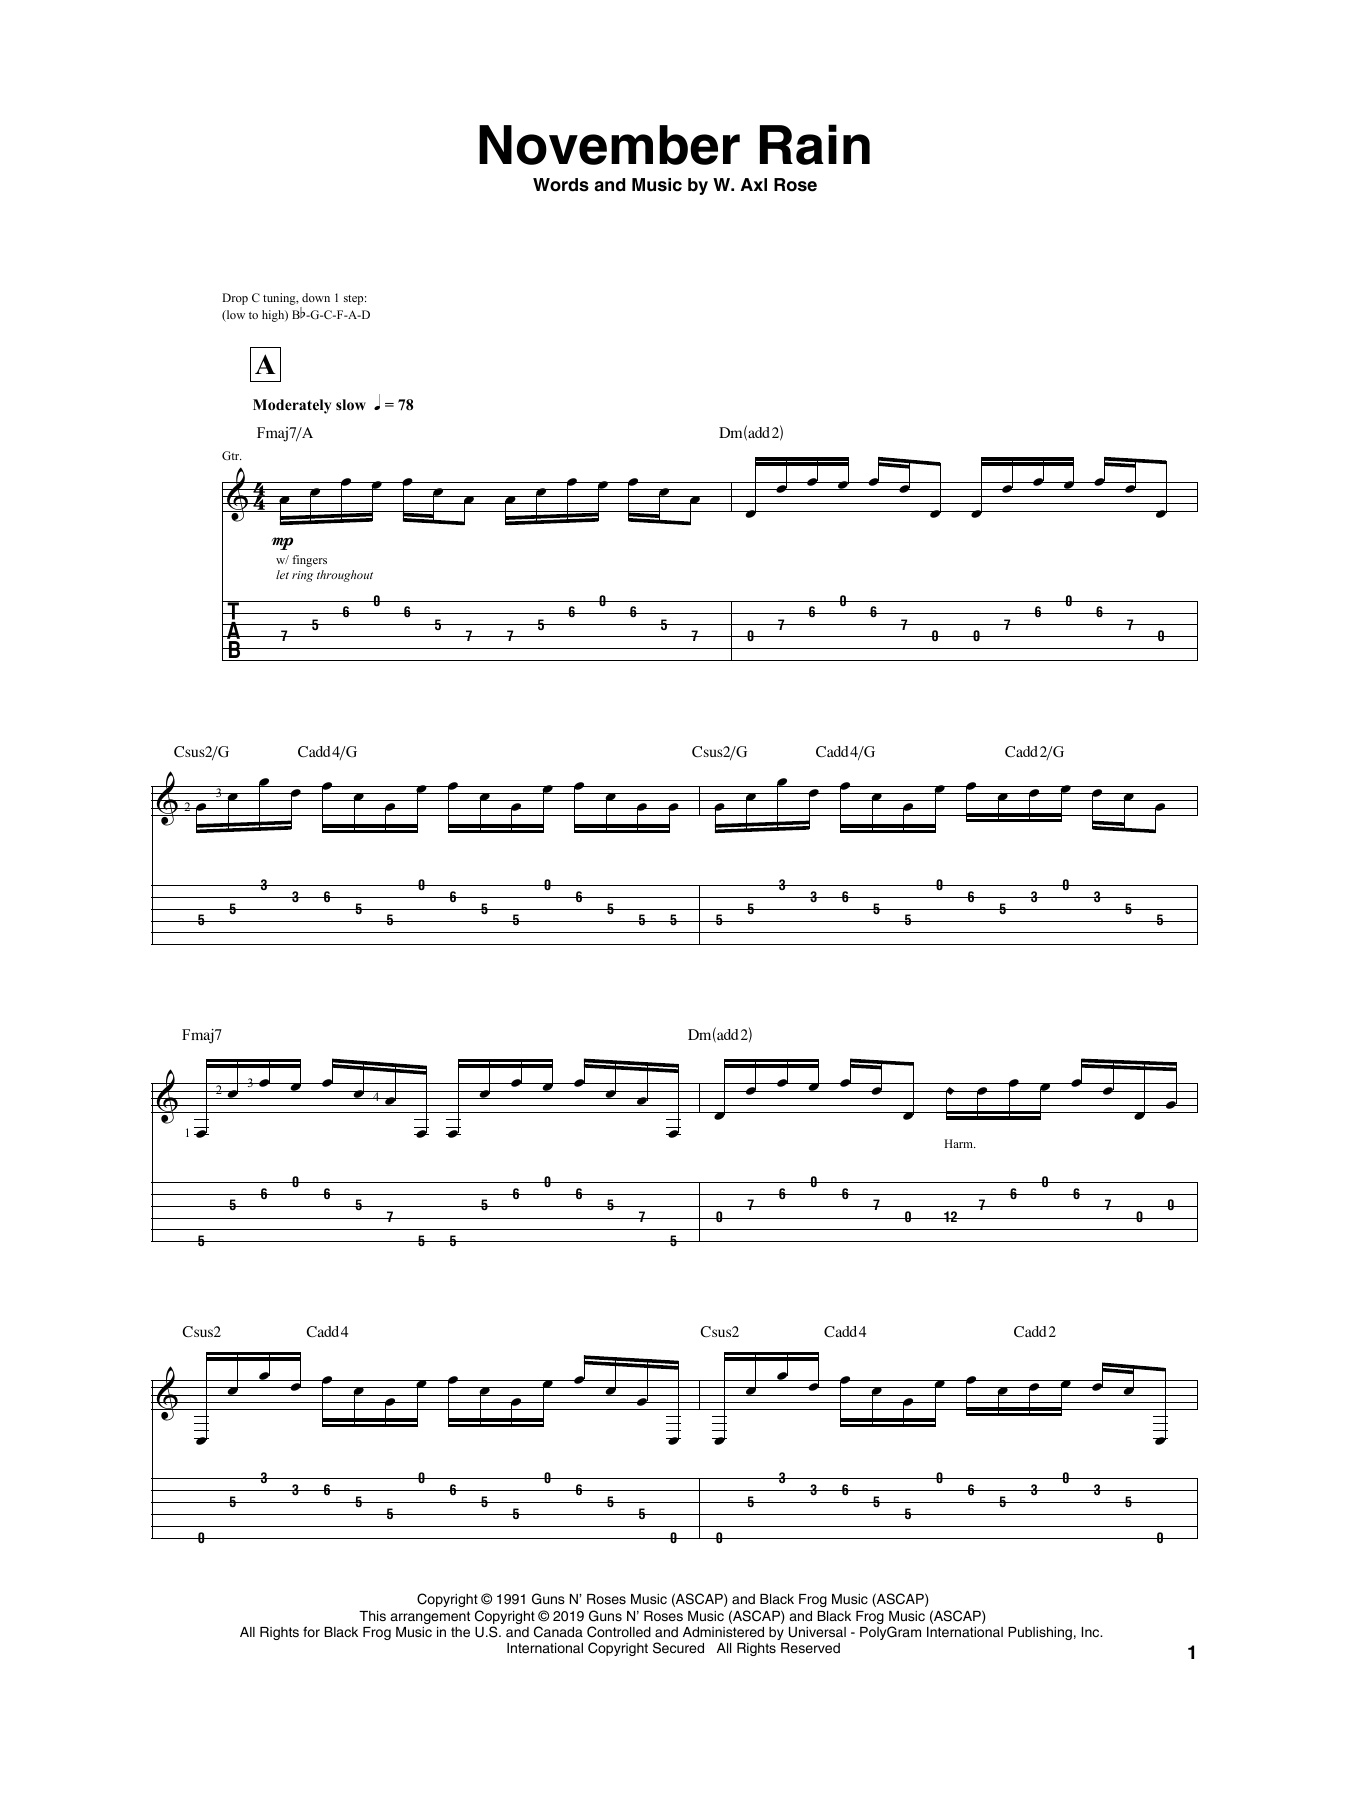 Download Igor Presnyakov November Rain Sheet Music and learn how to play Guitar Tab PDF digital score in minutes